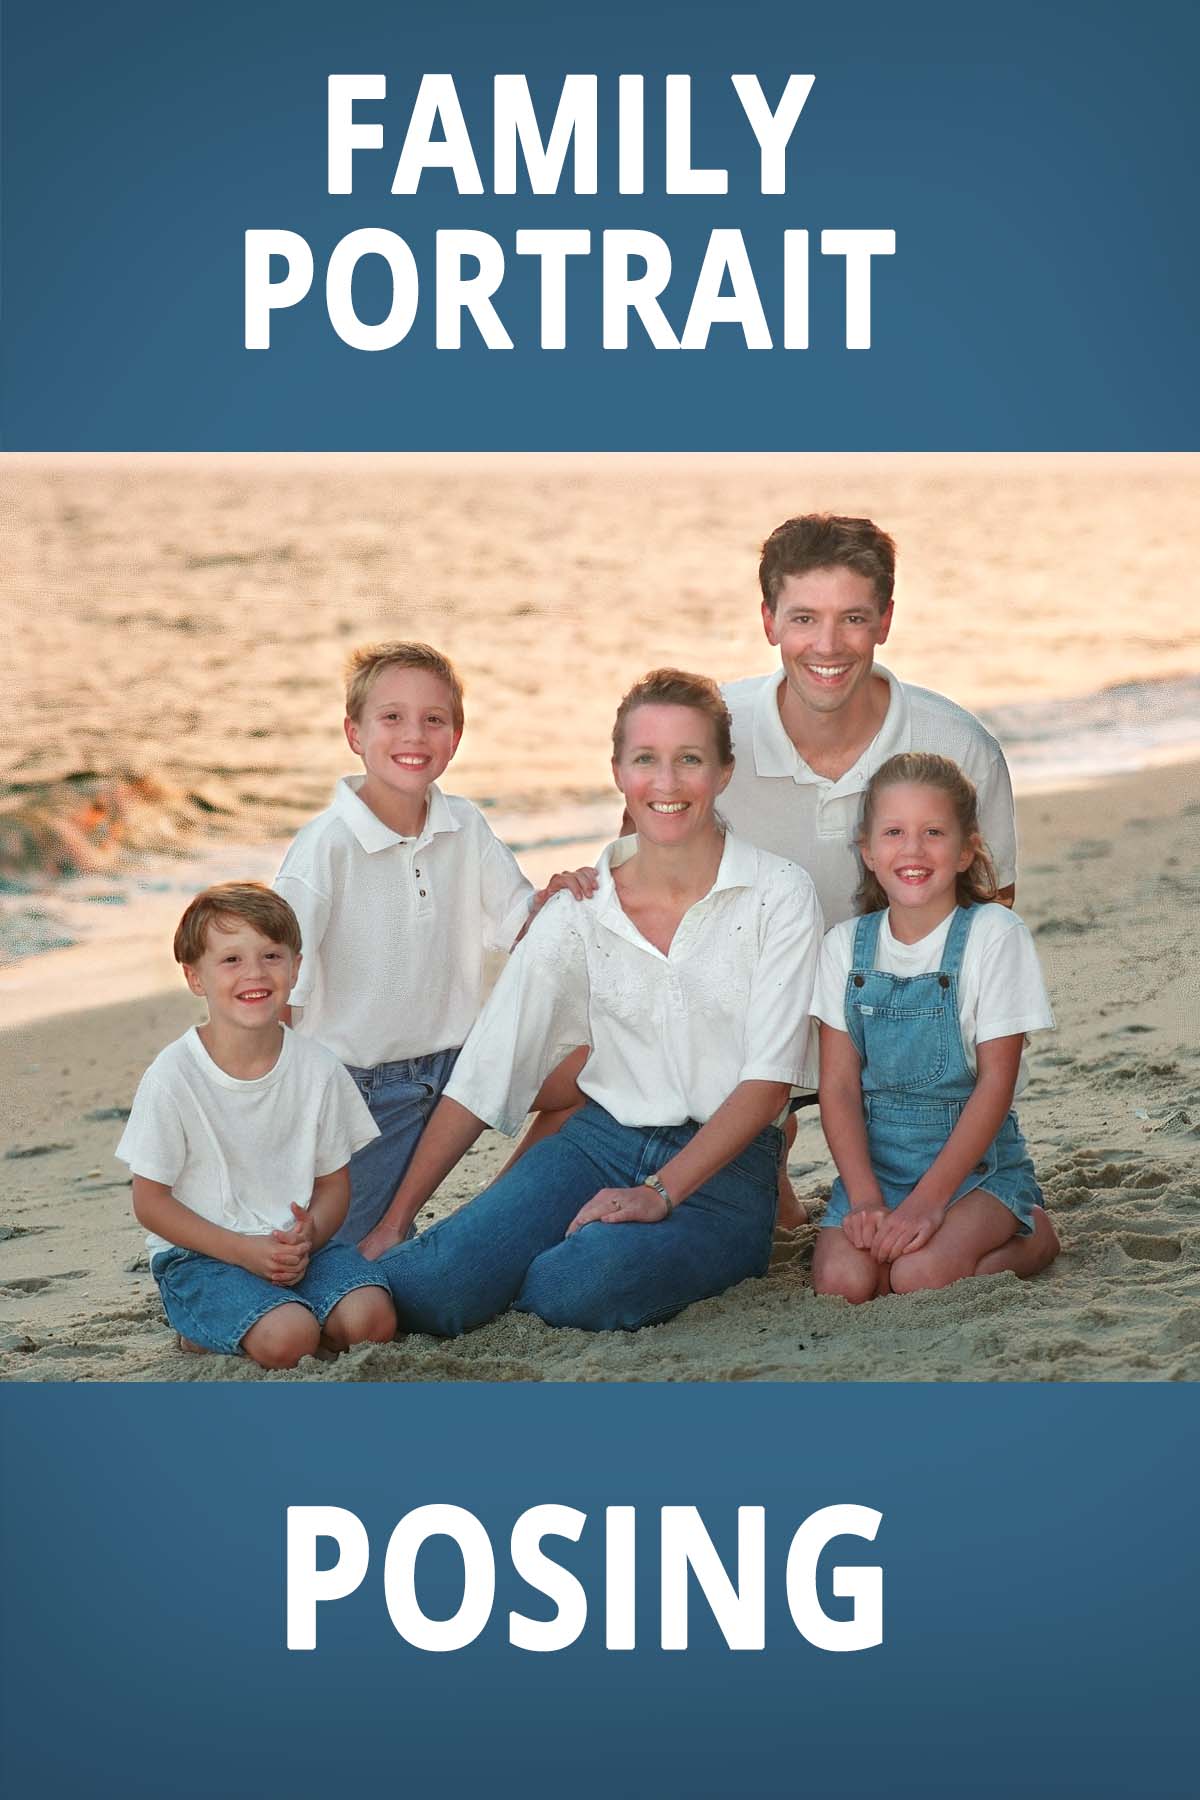 Family Portrait Promotion On Pinterest